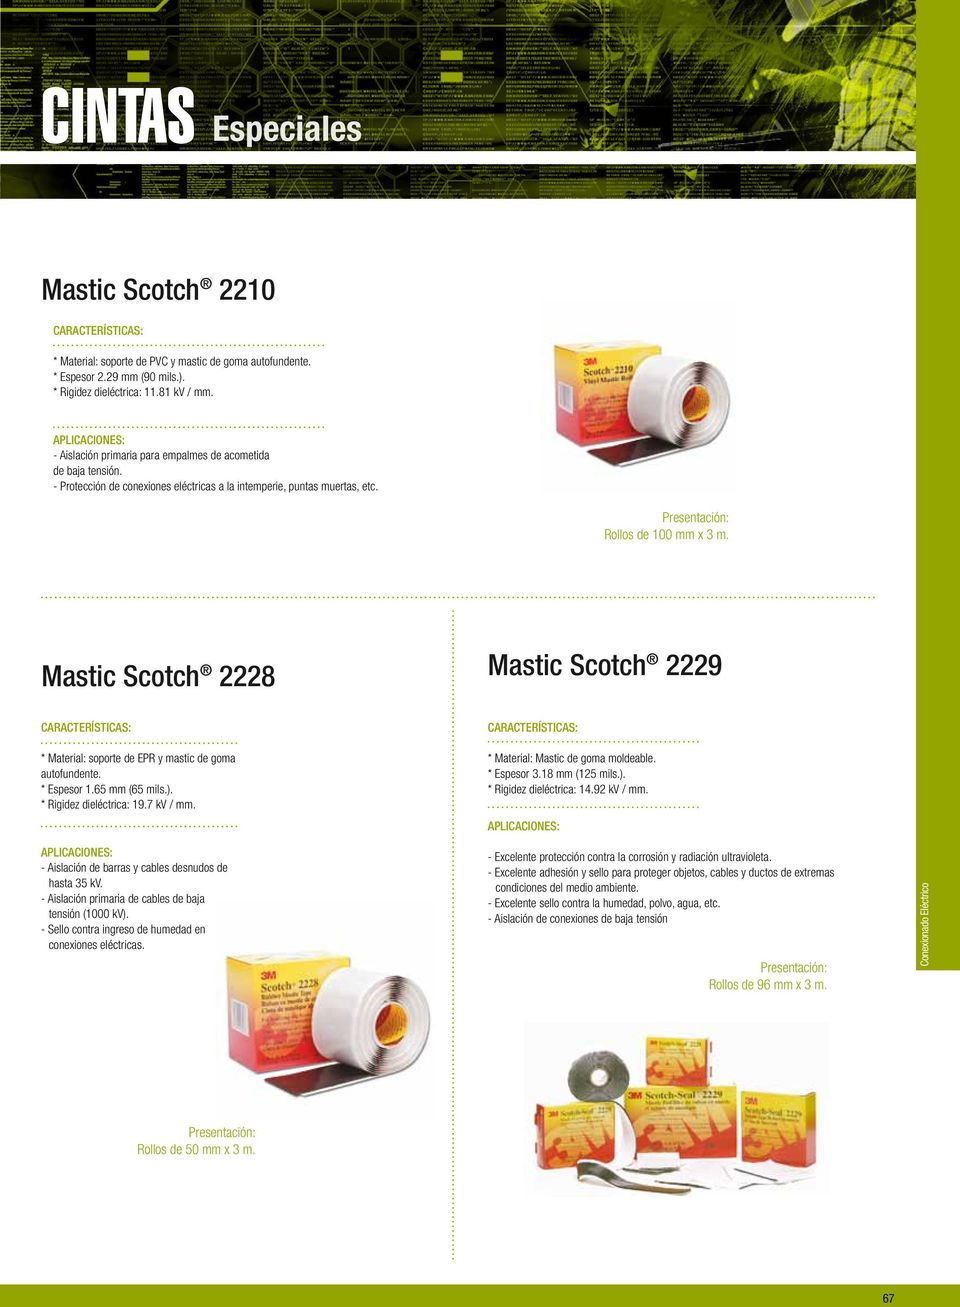 Mastic Scotch 2228 Mastic Scotch 2229 * Material: soporte de EPR y mastic de goma autofundente. * Espesor 1.65 mm (65 mils.). * Rigidez dieléctrica: 19.7 kv / mm.